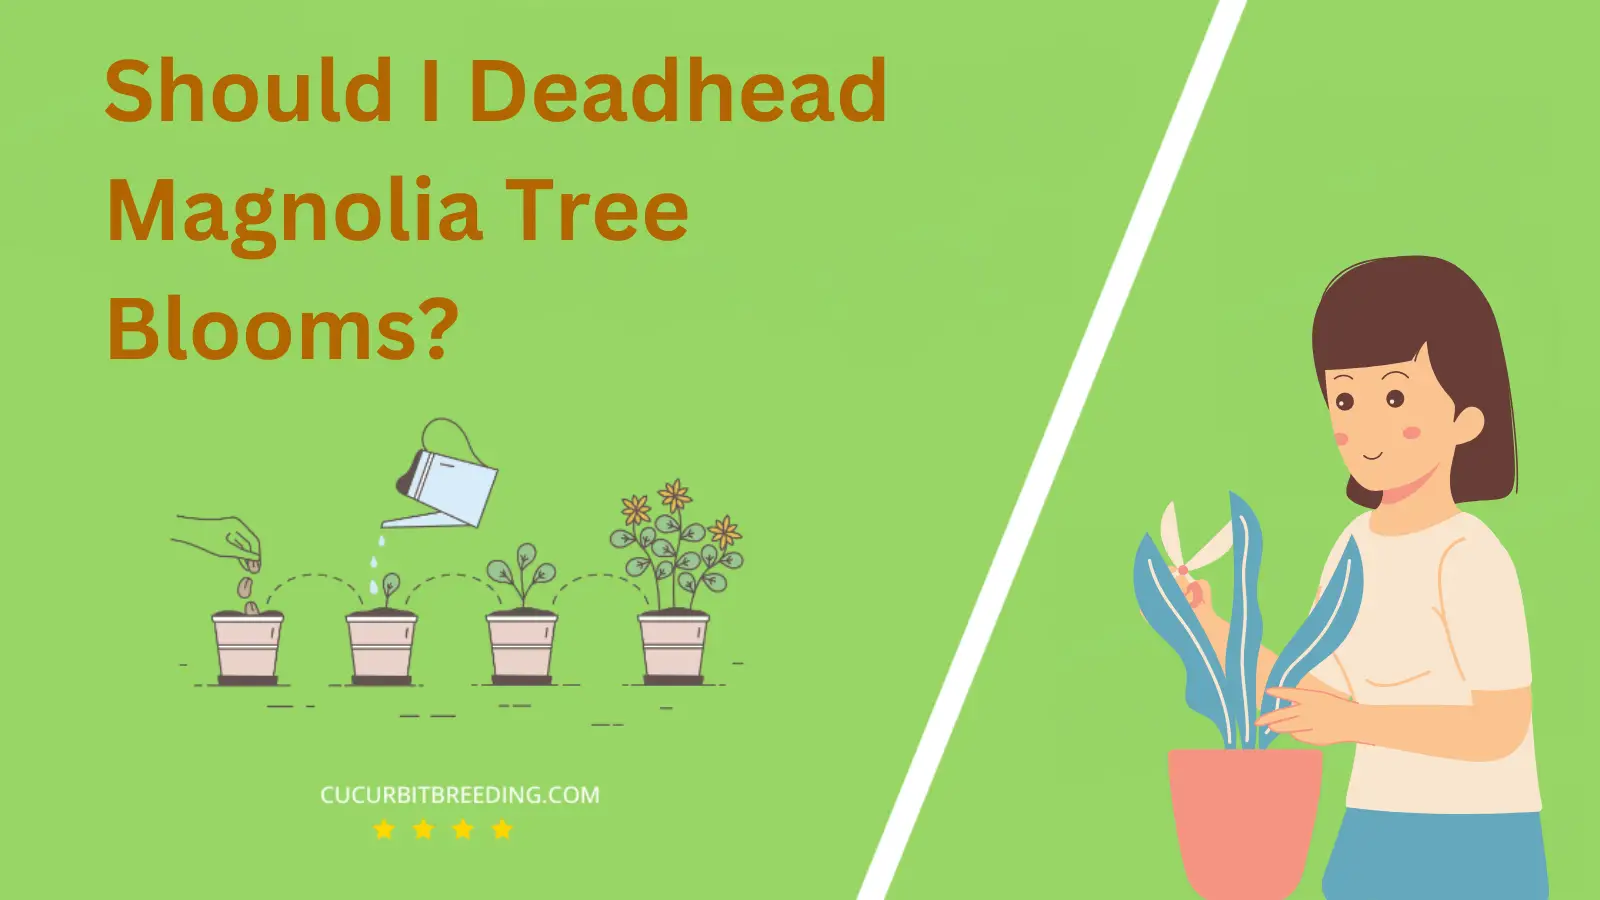 Should I Deadhead Magnolia Tree Blooms?